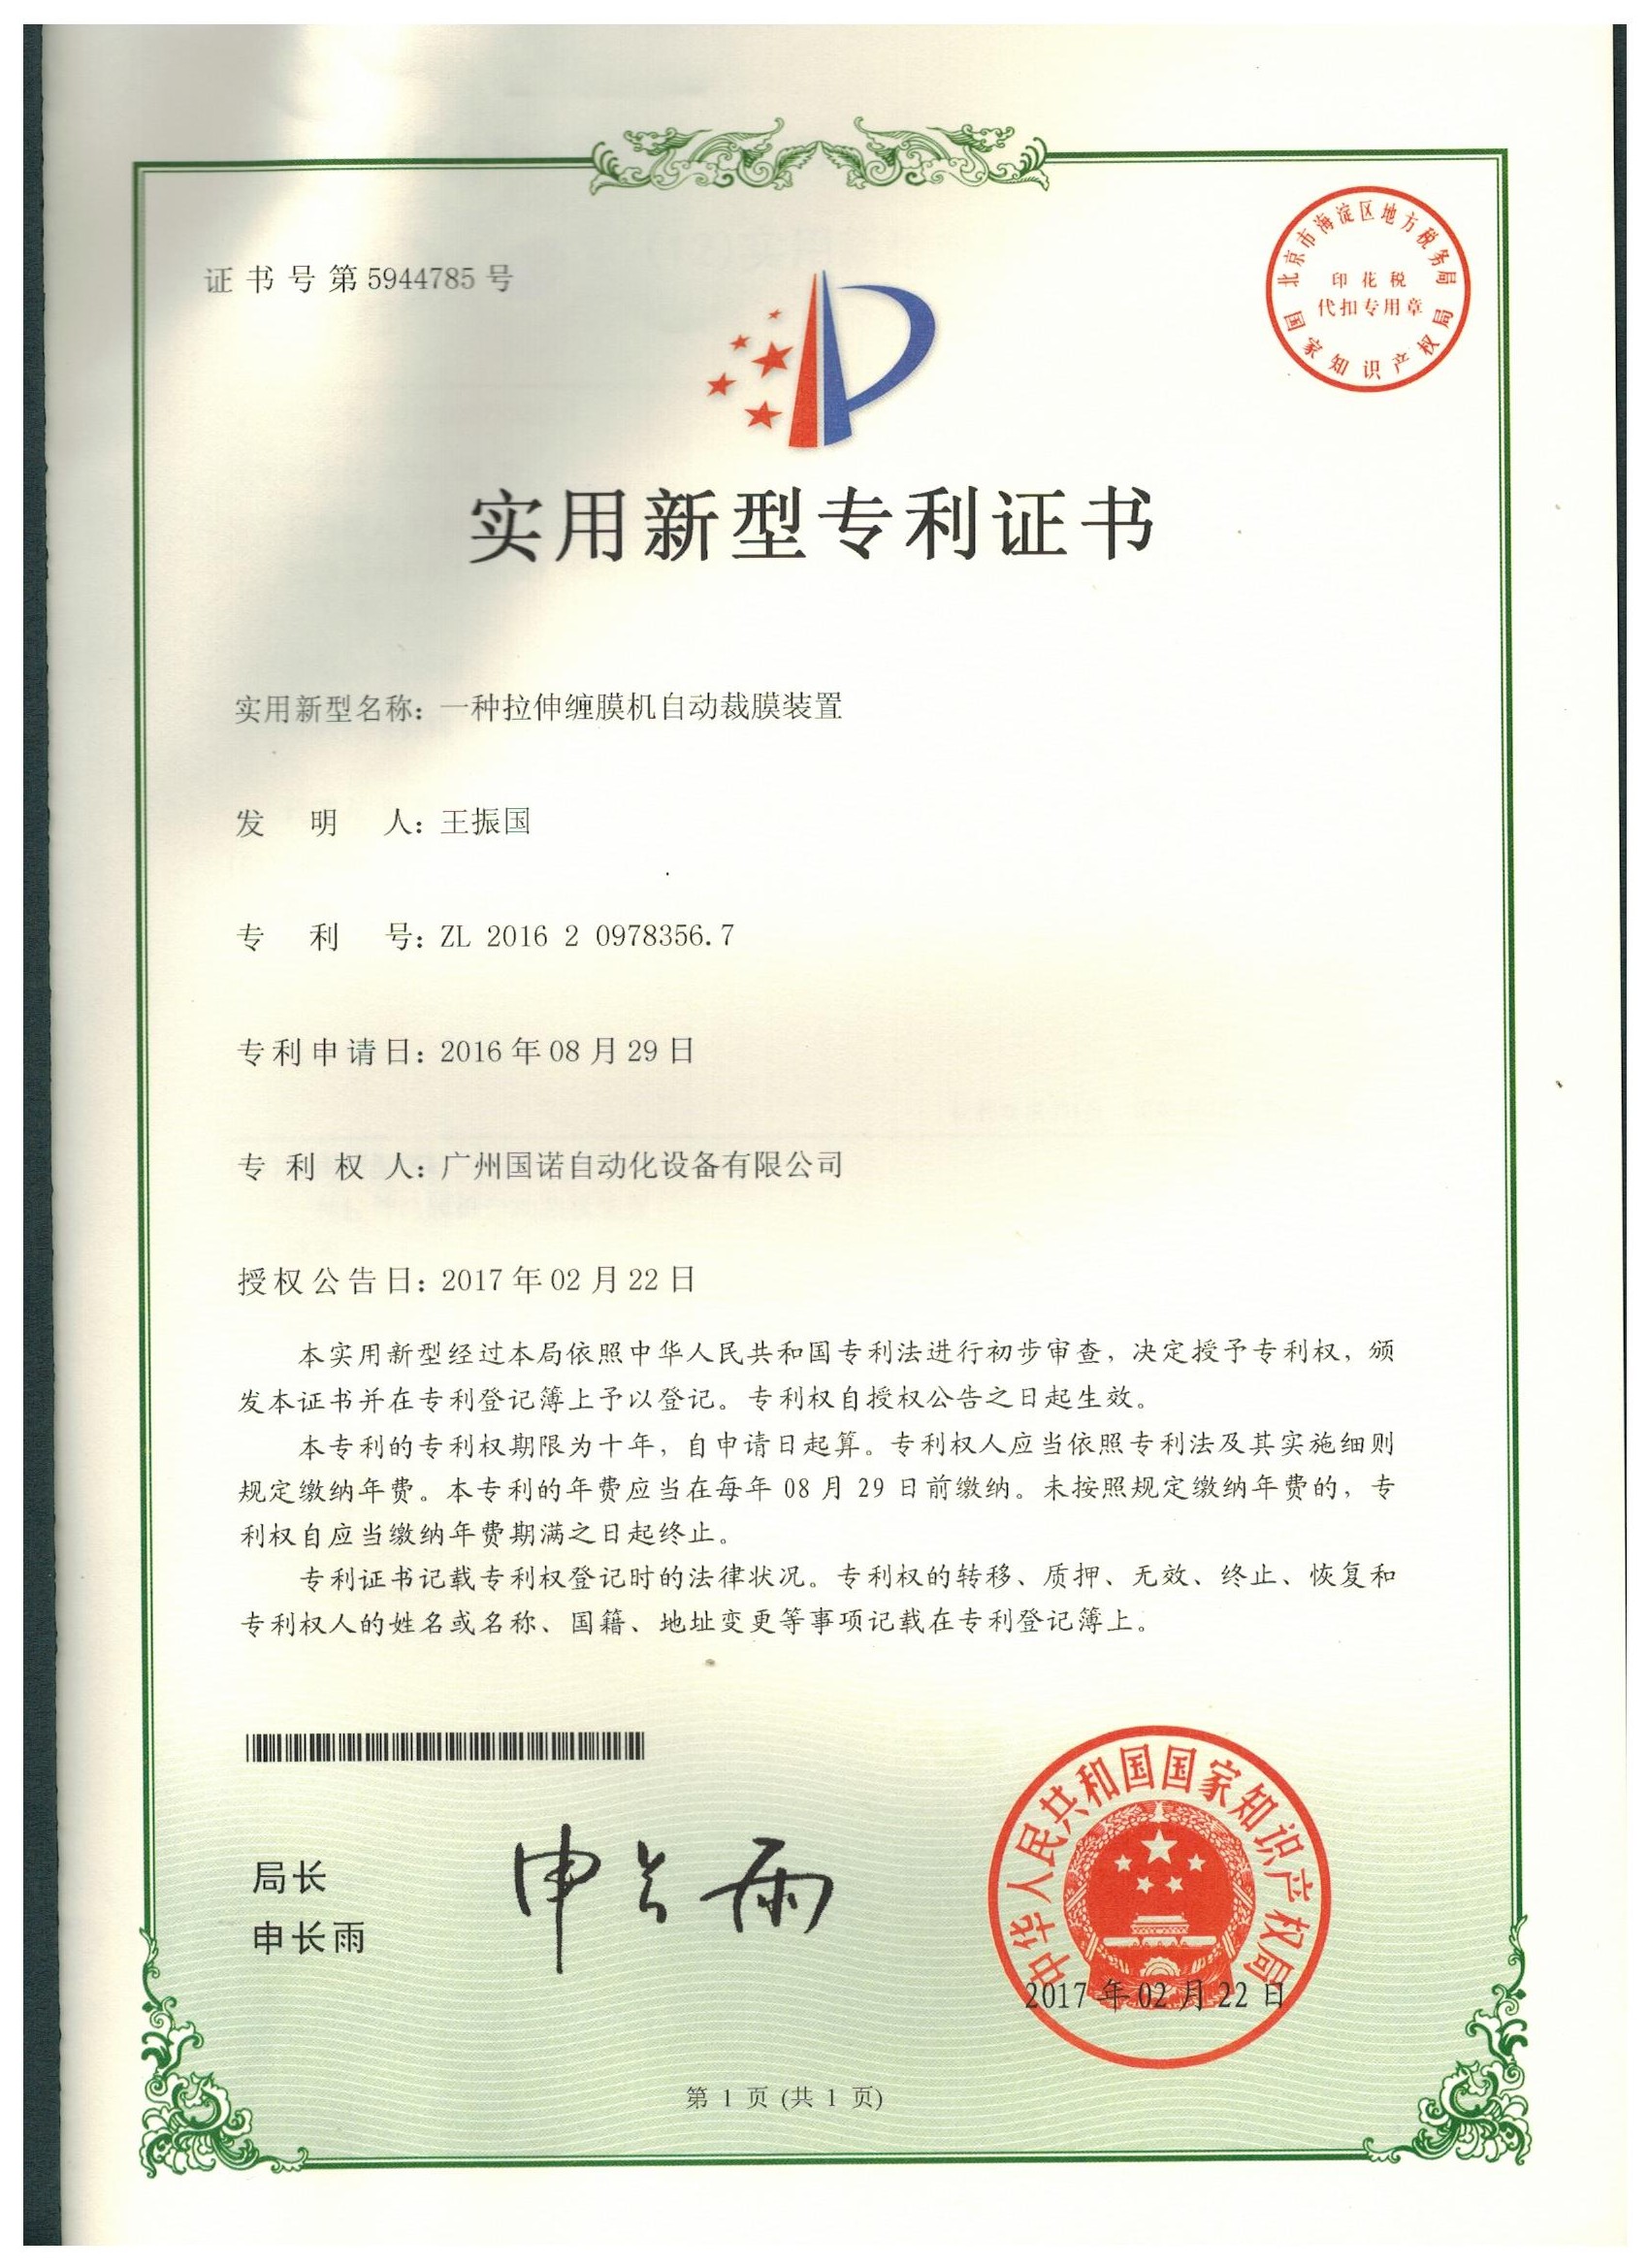 Packaging Machine Certificate